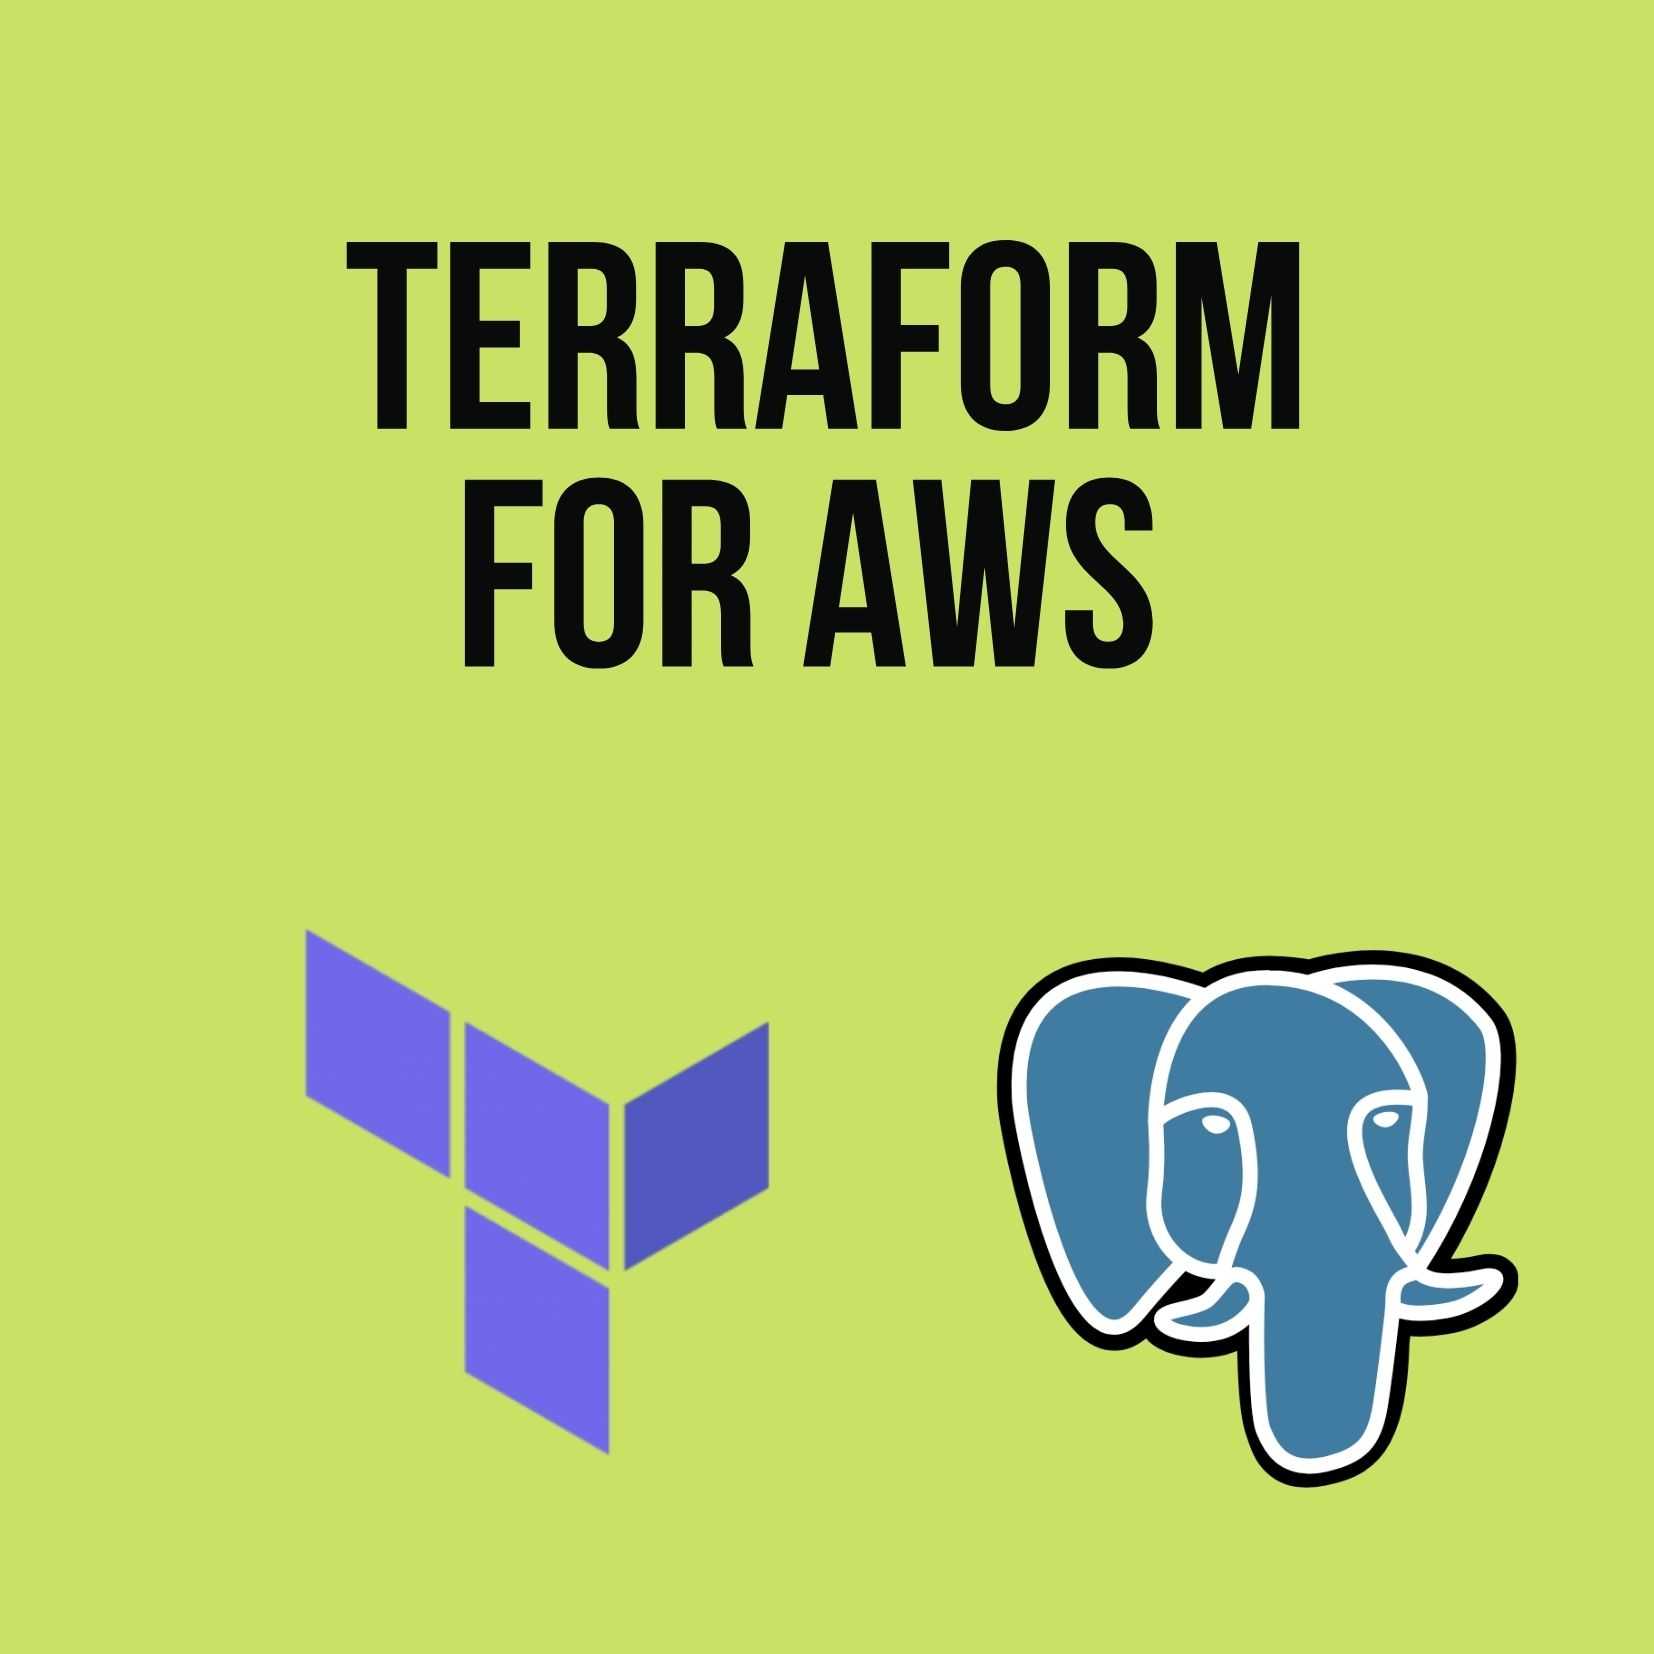 Automate the Deployment of PostgreSQL to EC2 ARM Using Terraform